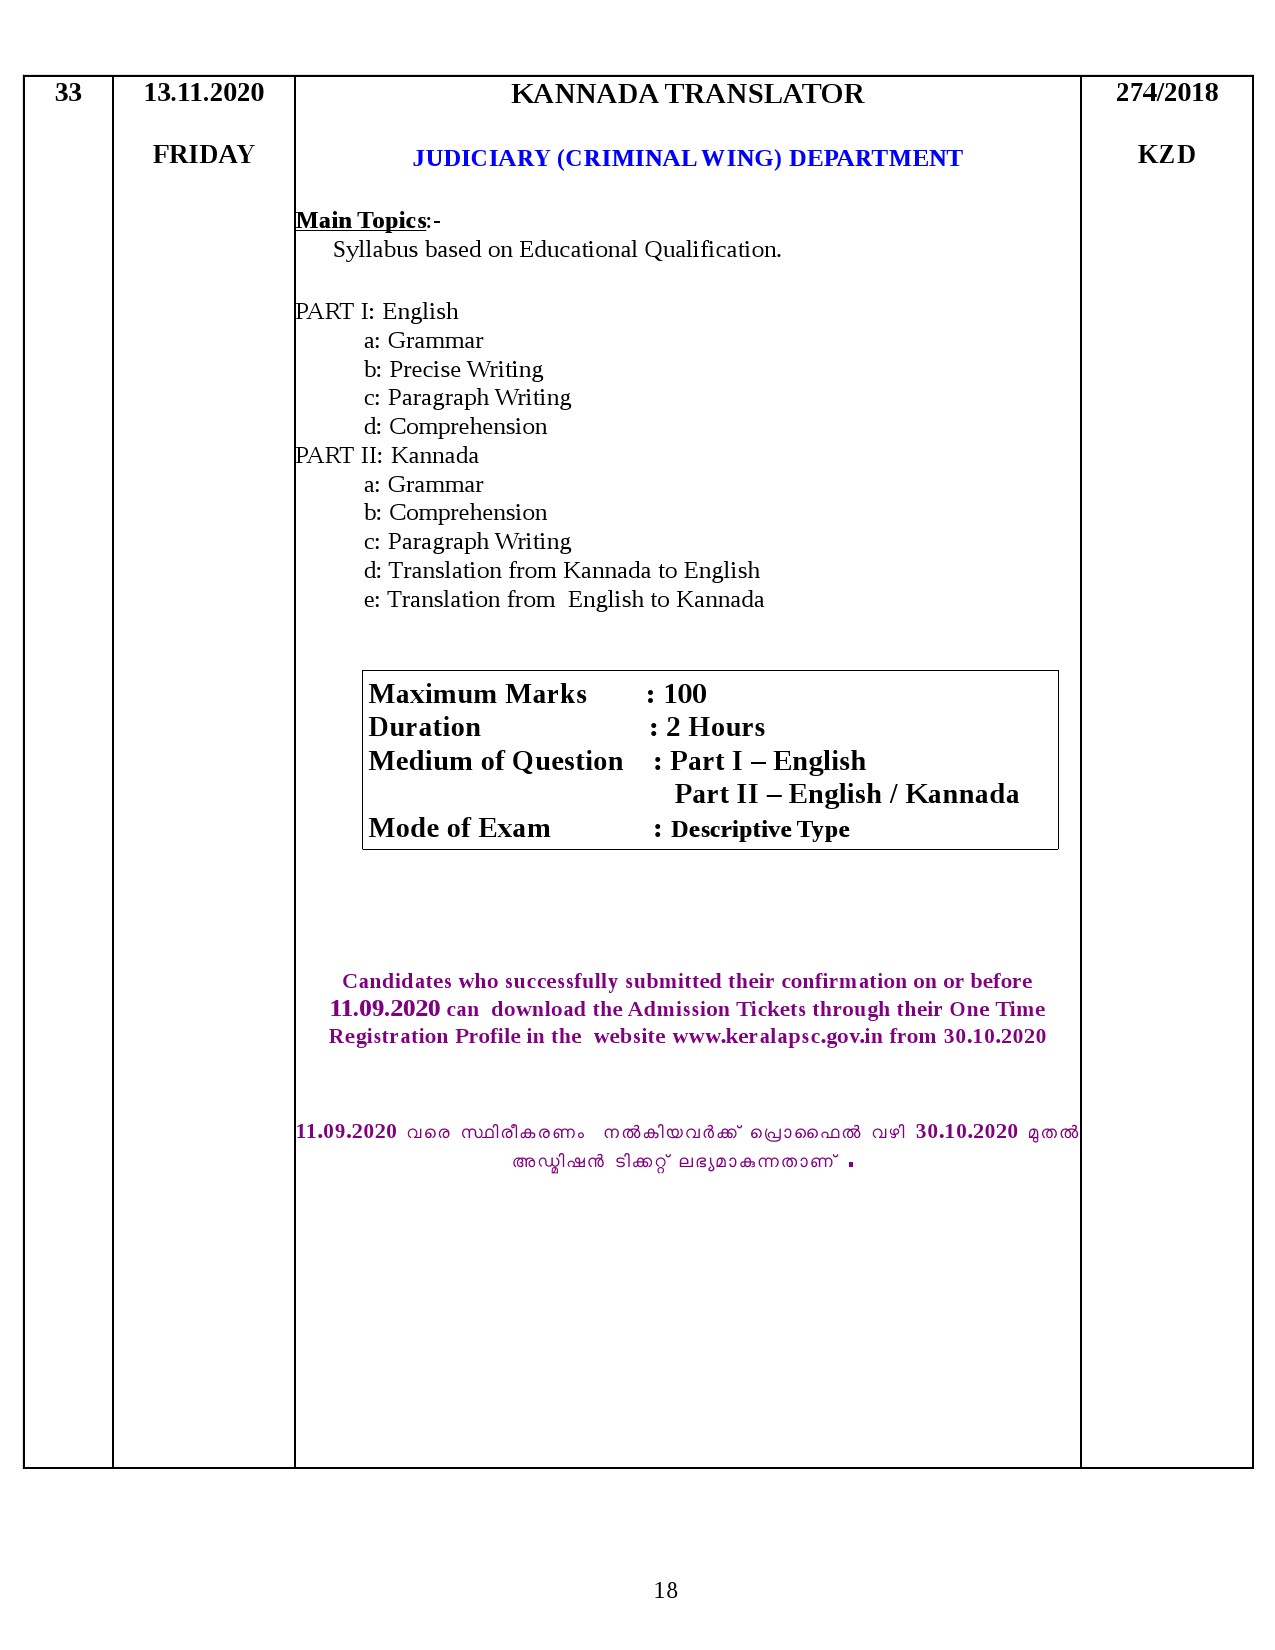 Kerala PSC Final Exam Schedule for November 2020 - Notification Image 18